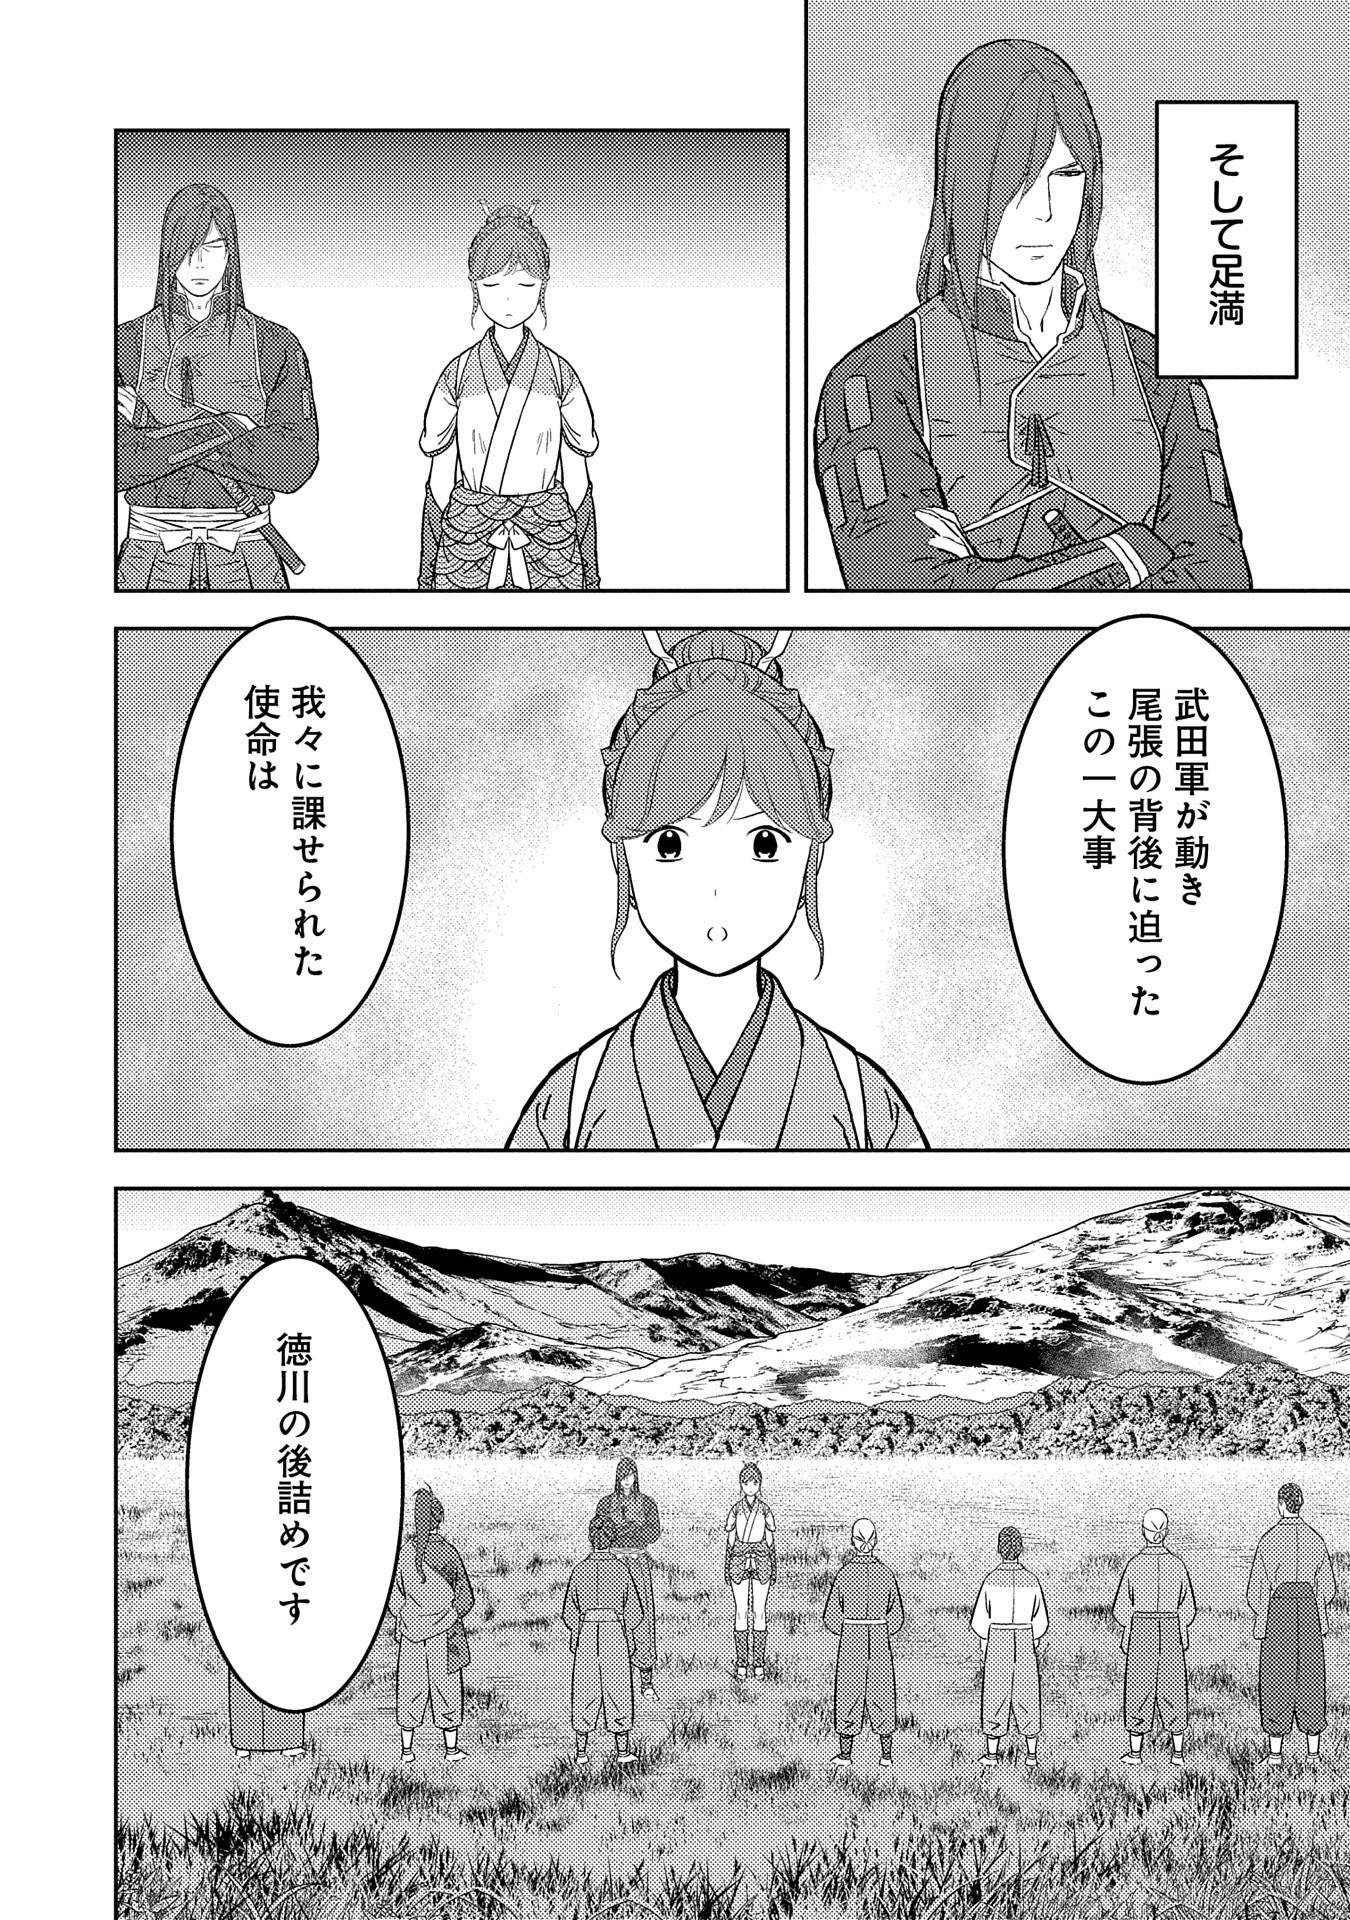 Sengoku Komachi Kuroutan - Chapter 79 - Page 14